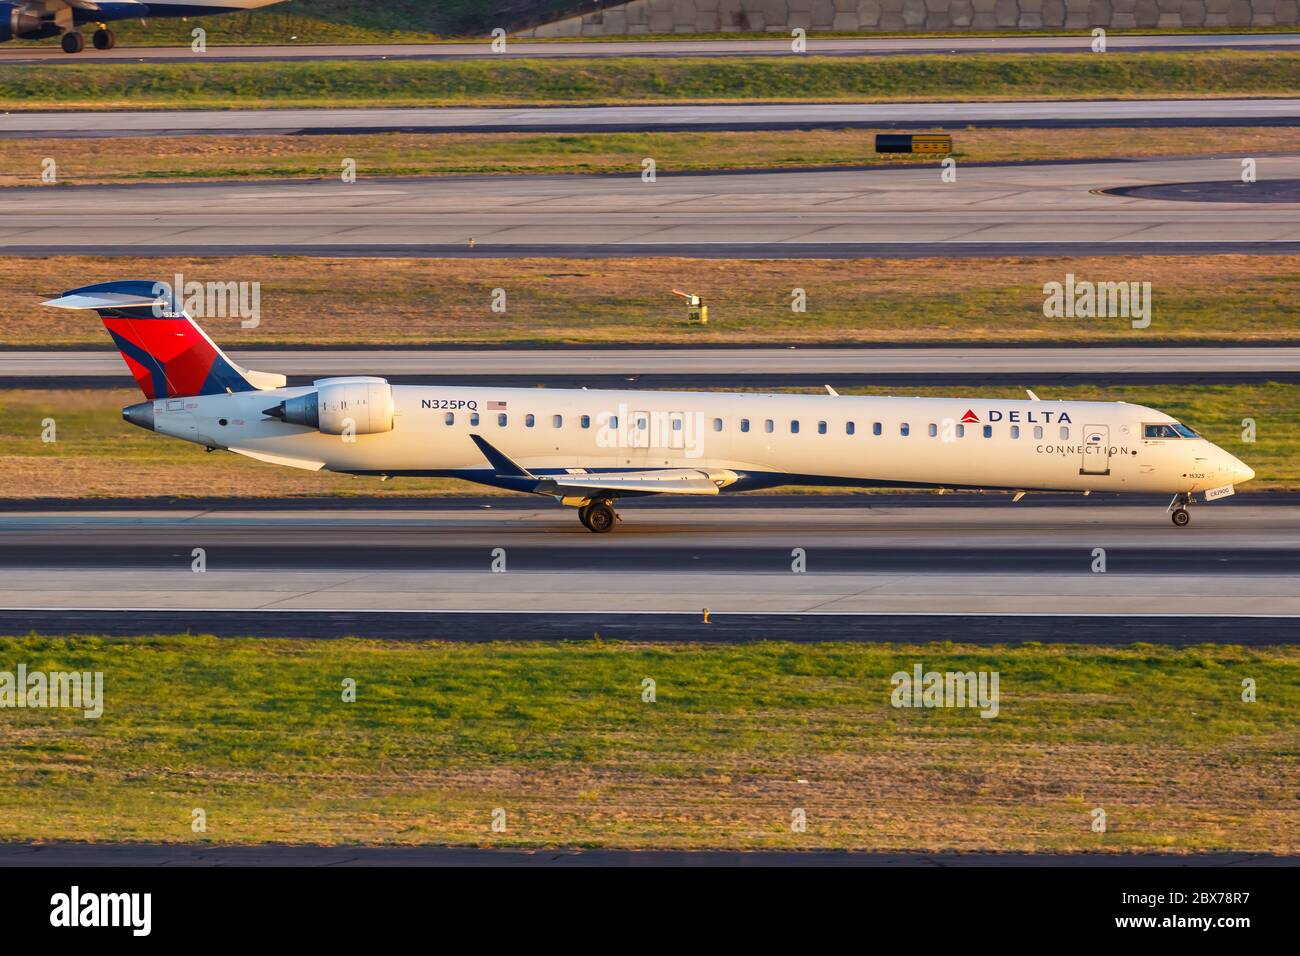 Atlanta, Georgia - April 2, 2019: Delta Connection Endeavor Air Bombardier CRJ-900 airplane at Atlanta airport (ATL) in Georgia. Stock Photo